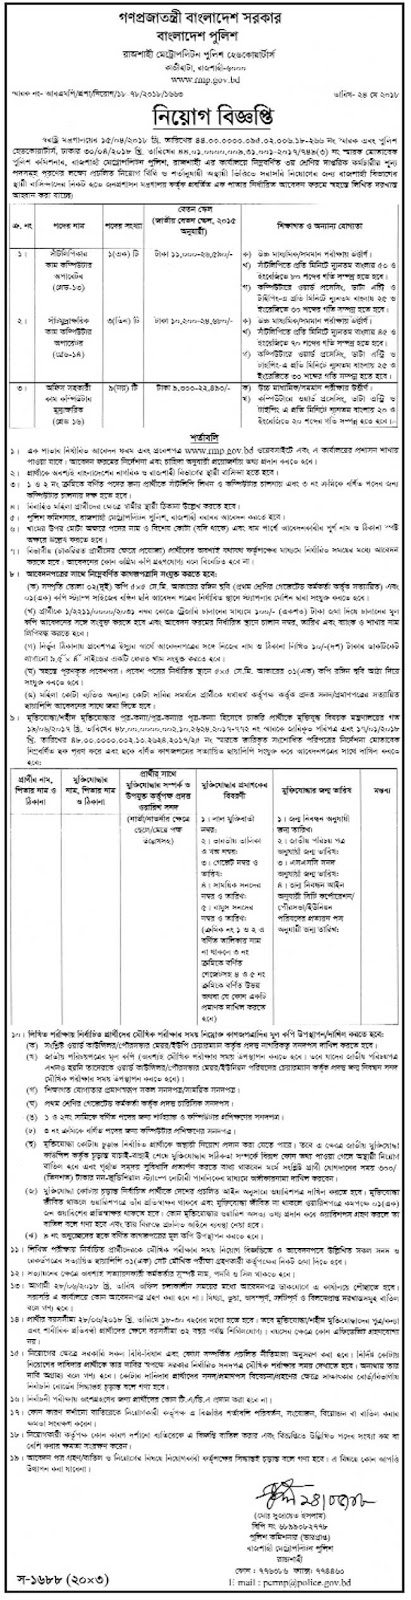 Rajshahi Metropolitan Police (RMP) Job Circular 2018